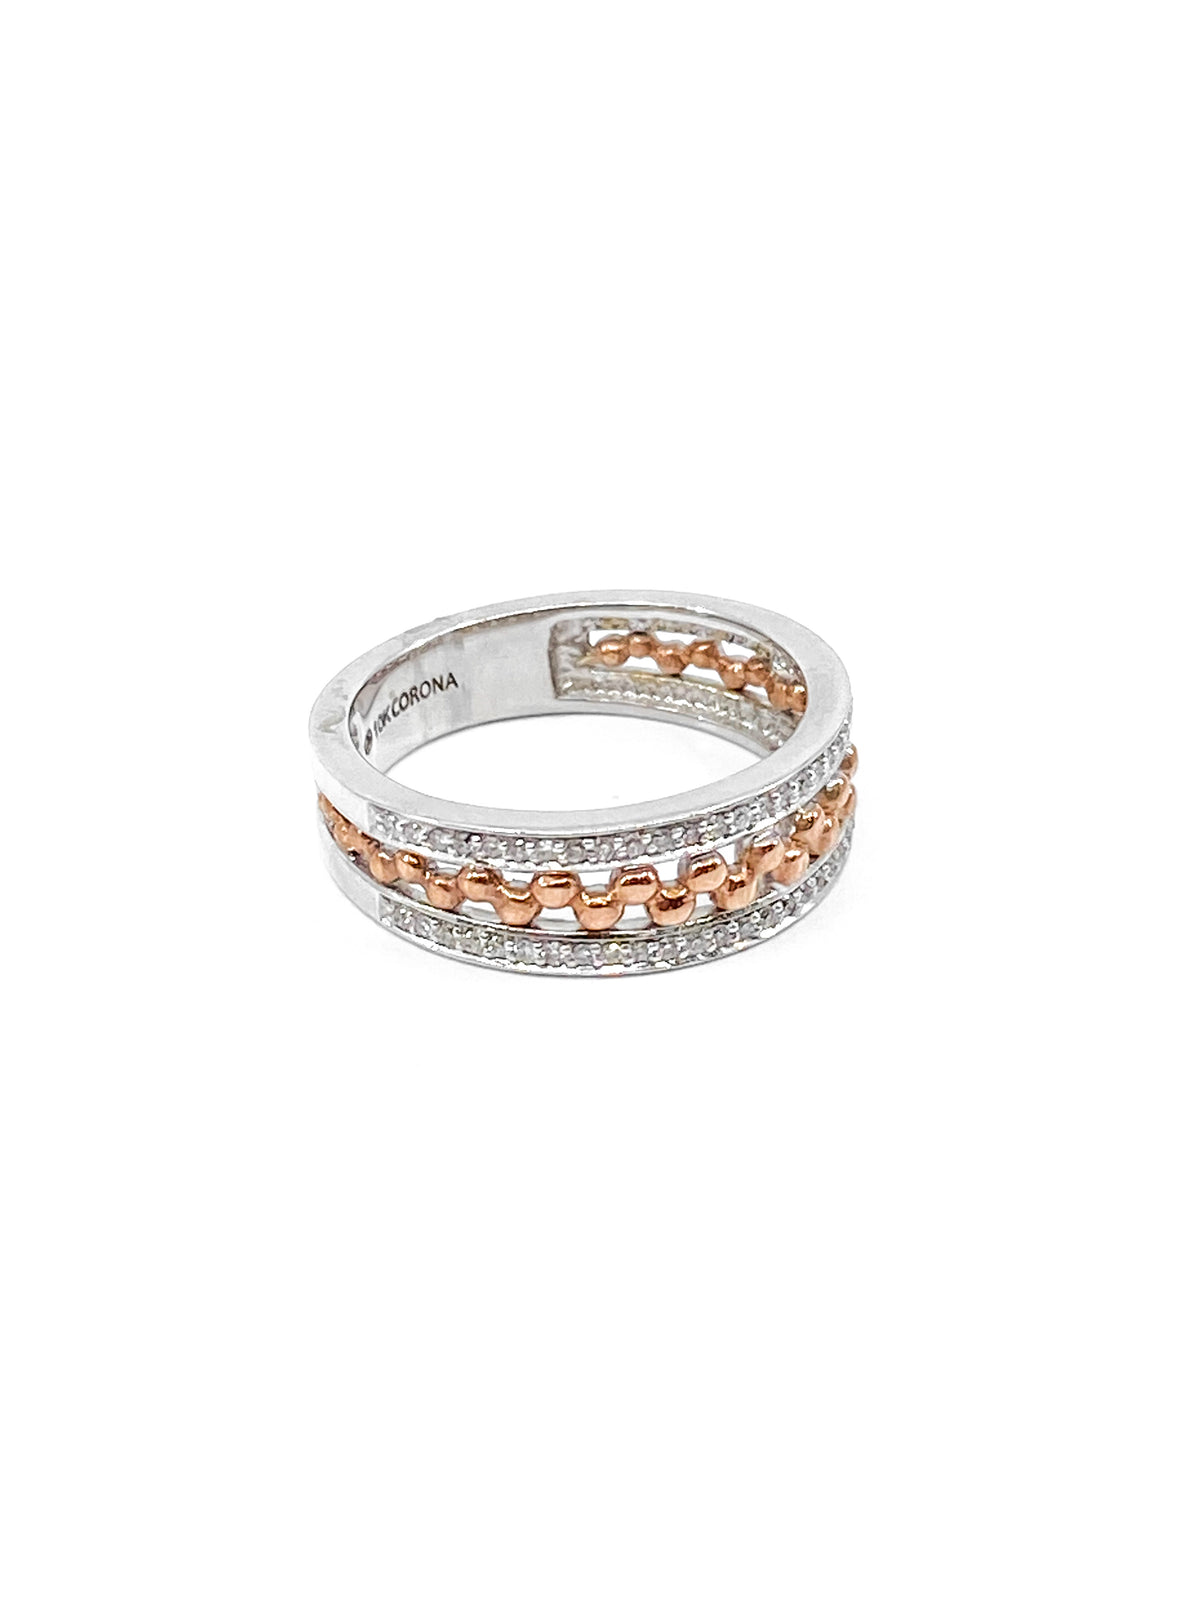 10K White &amp; Rose Gold 0.18cttw Diamond Ring, size 6.5